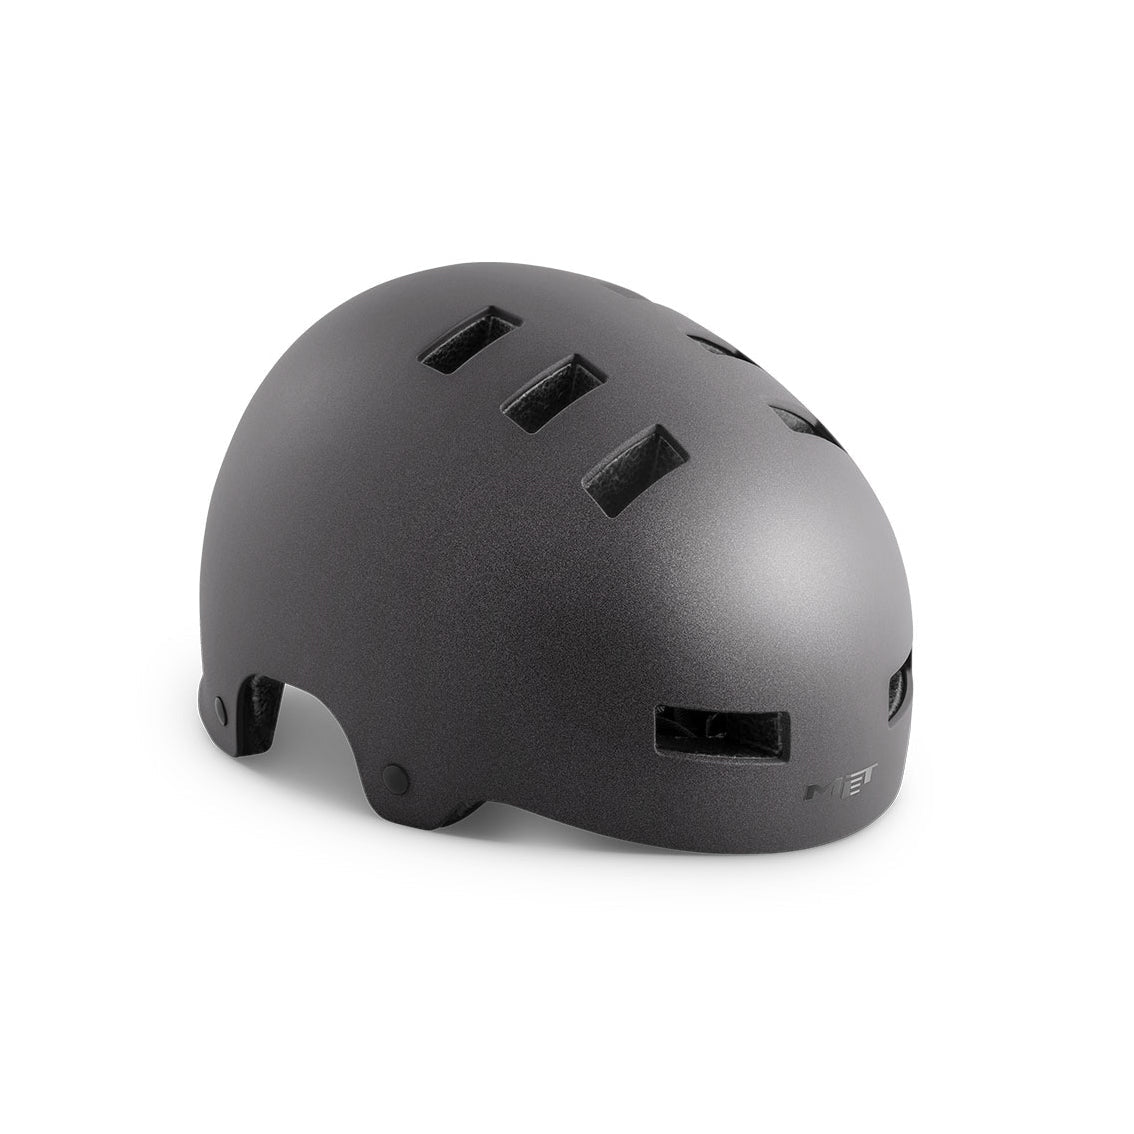 MET Zone CE Urban Commuting Helmet - Cyclop.in